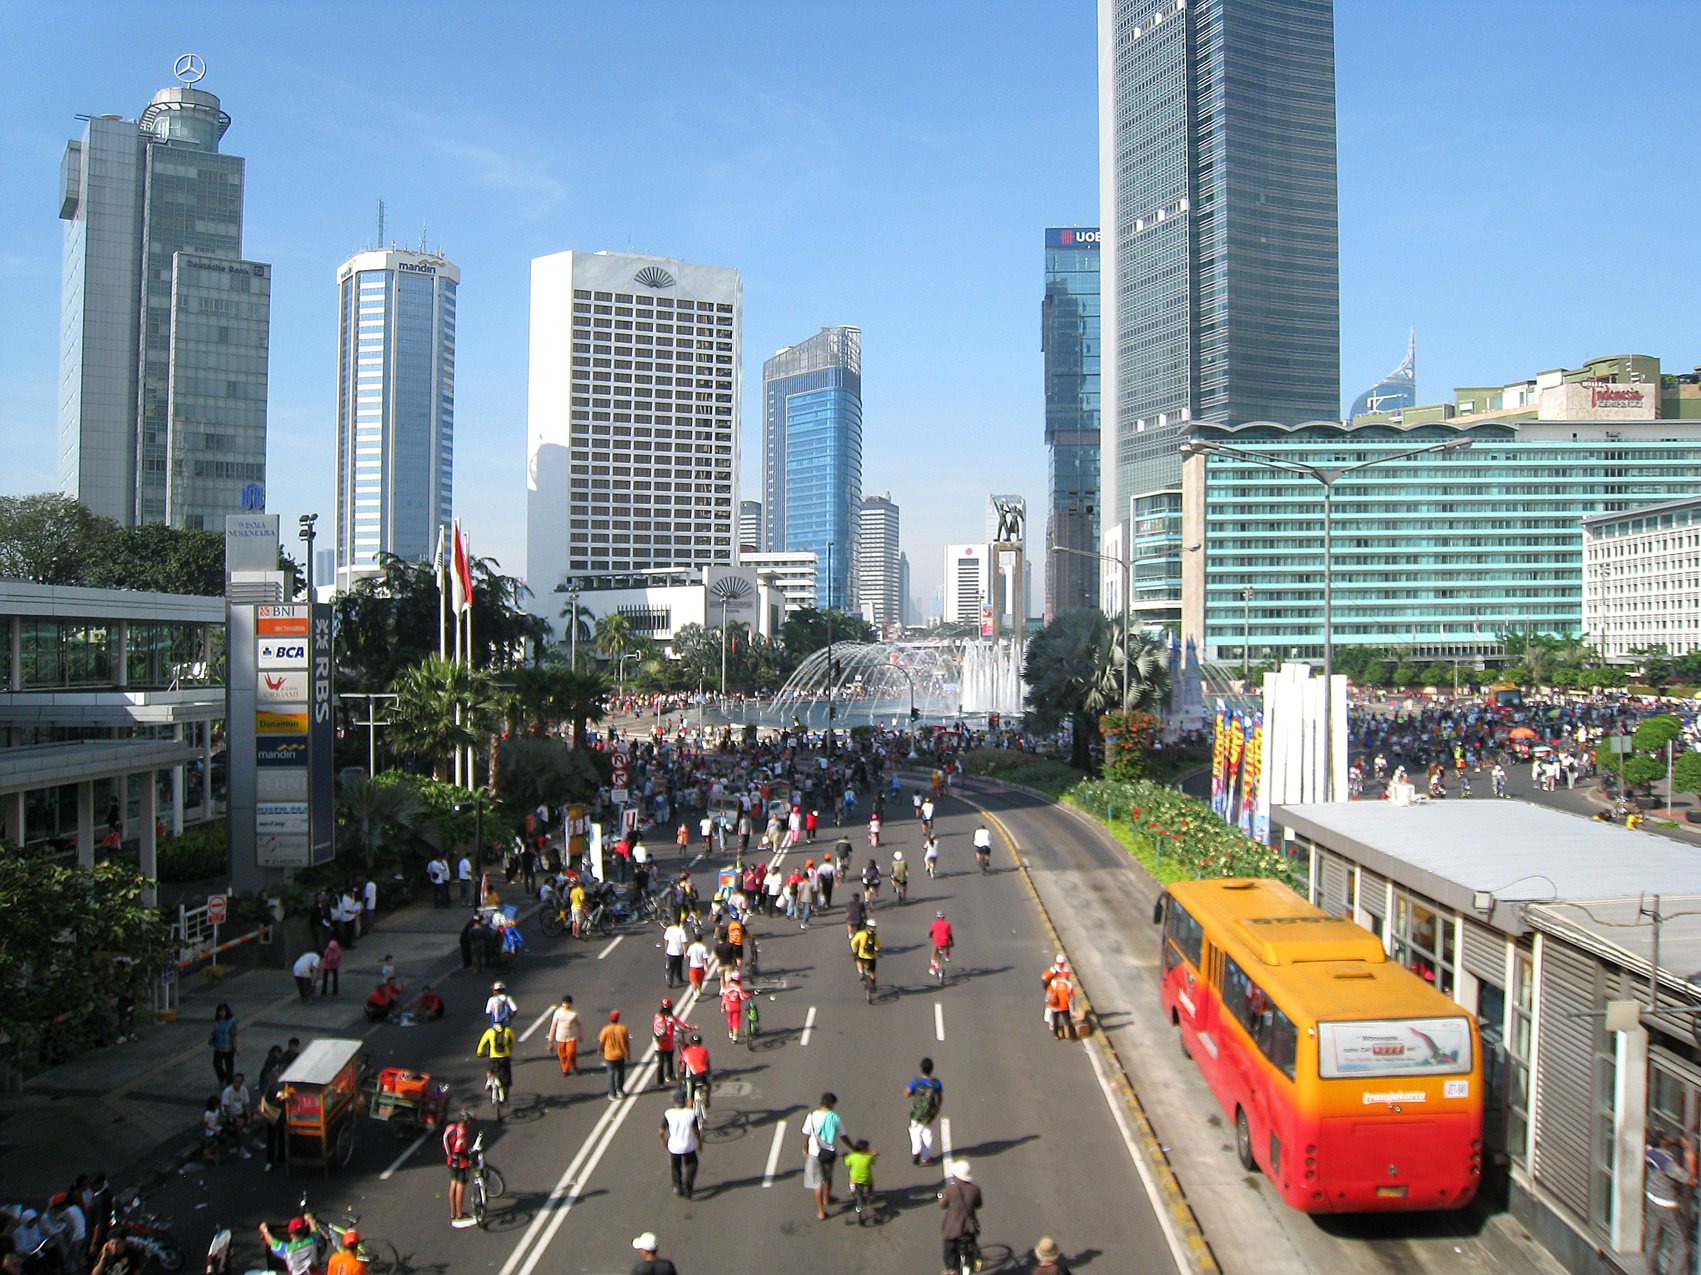 IMAGE: Jakarta Car-Free Day (Gunawan Kartapranata CC BY-SA 3.0)